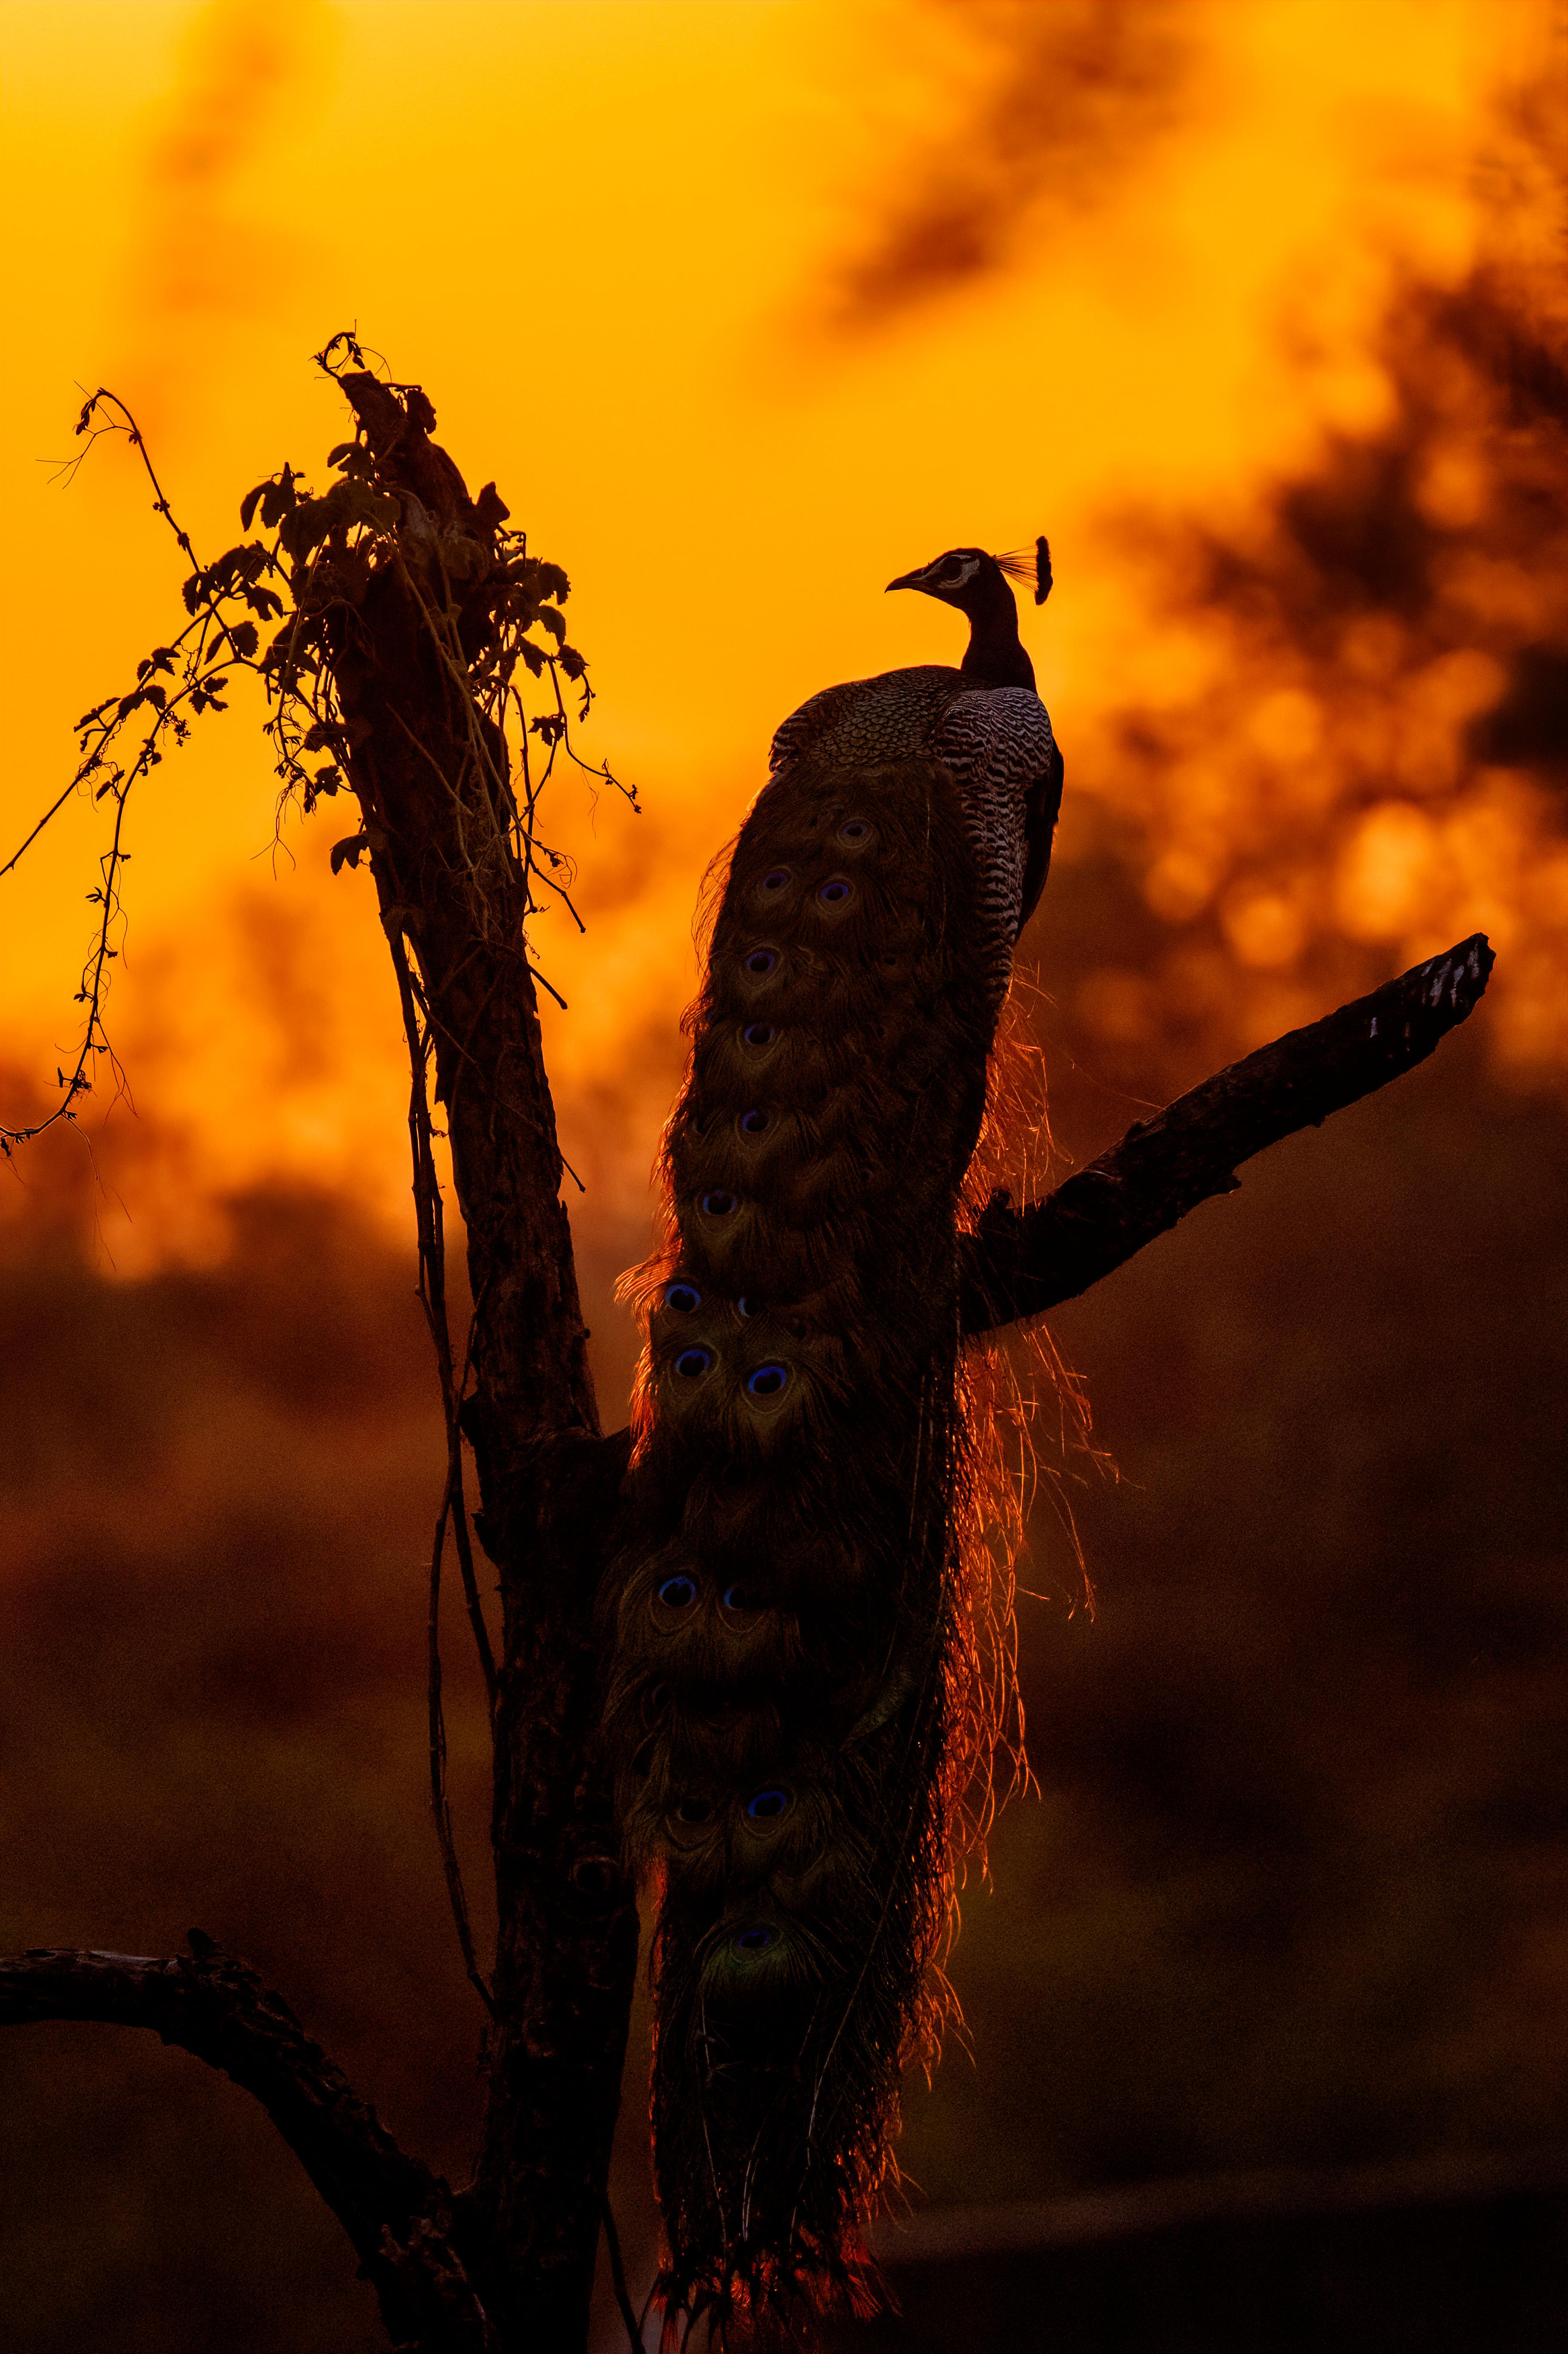 Animal Print Aditya Dicky Singh - Paysage Animal Grande Photographie Nature Paon Coucher de soleil Indien Orange Arbres 